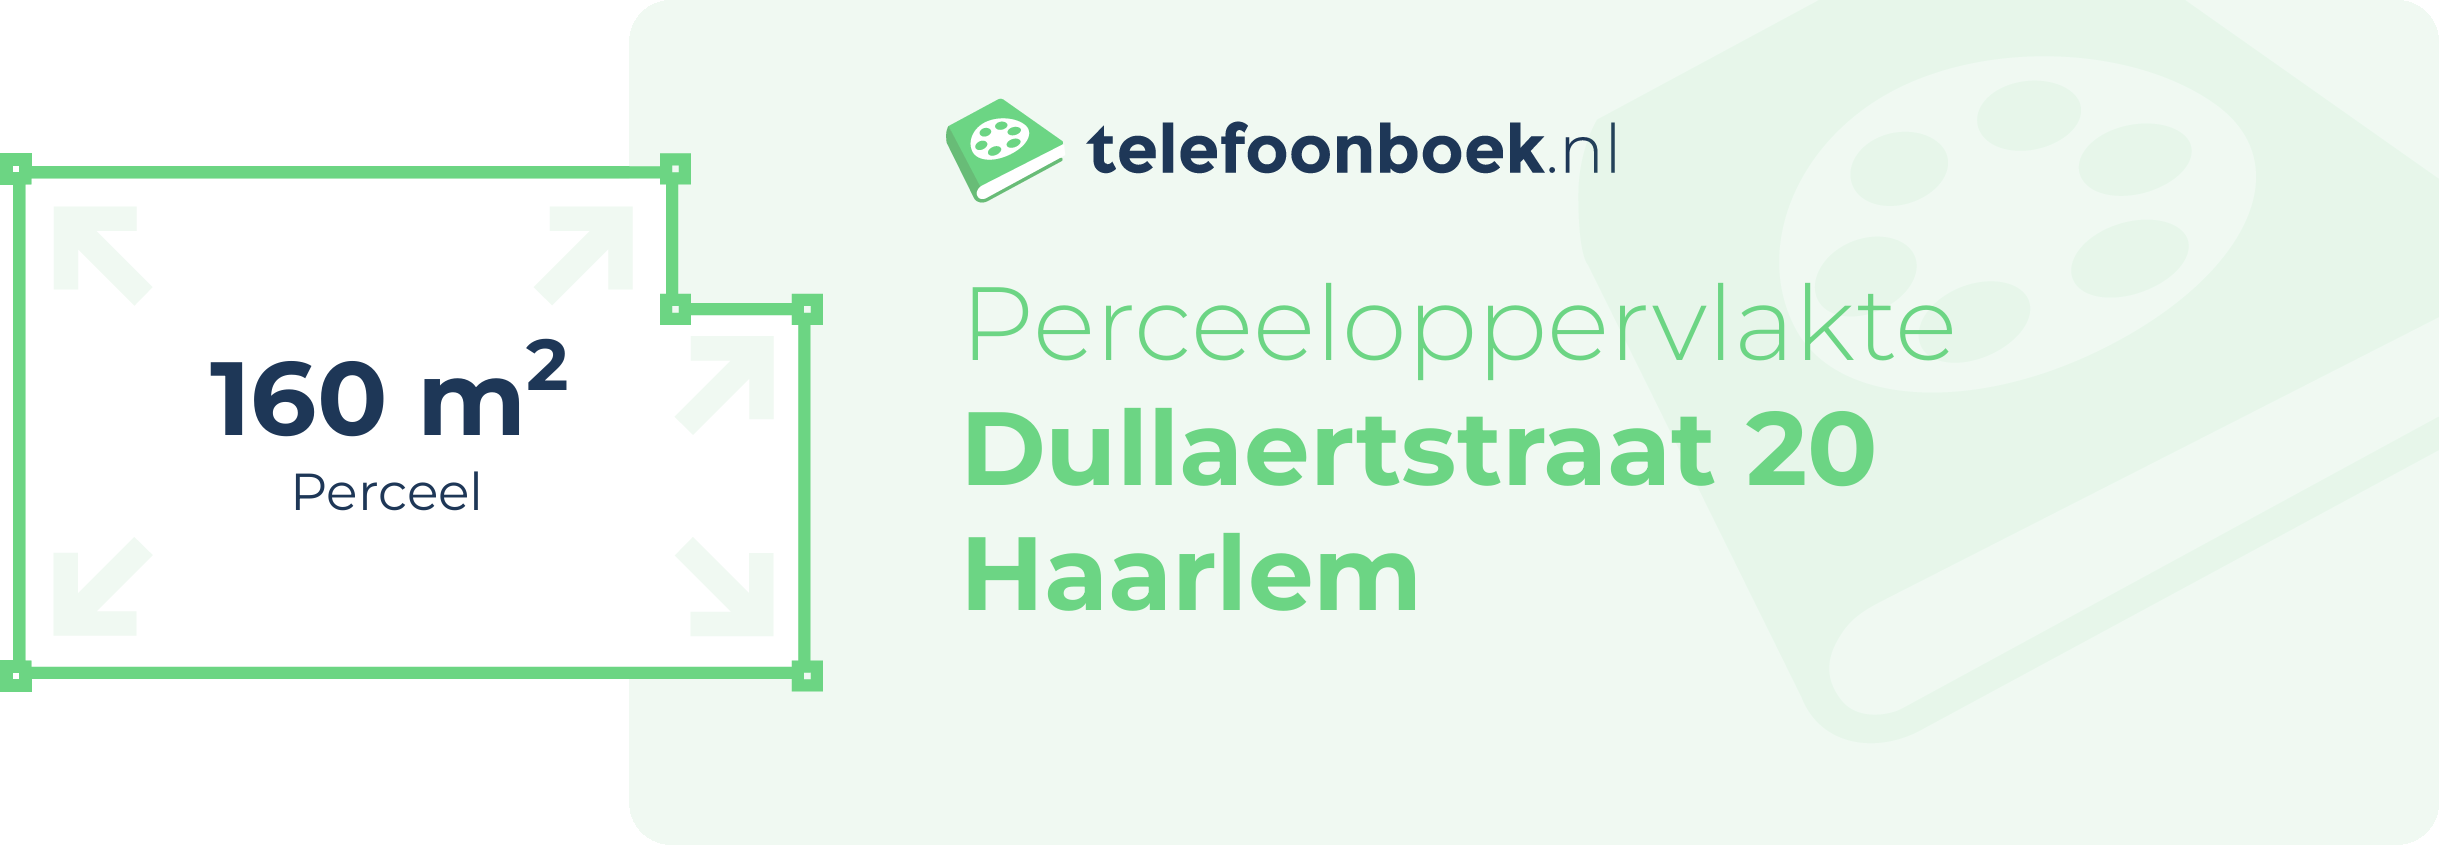 Perceeloppervlakte Dullaertstraat 20 Haarlem